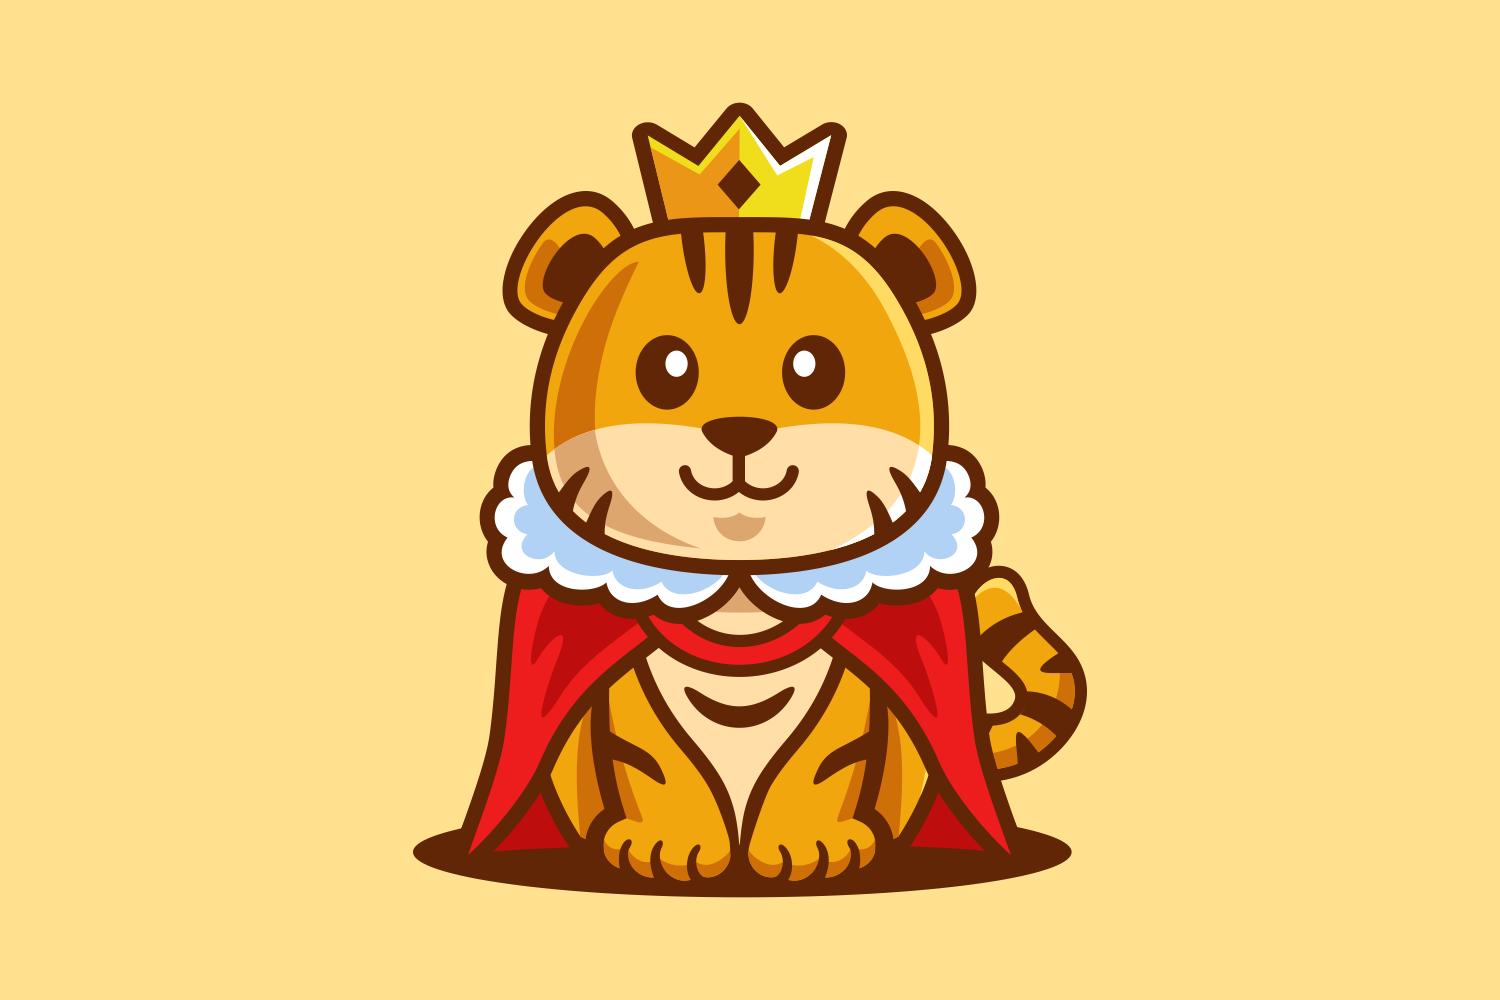 King Tiger Cub Cartoon Sitting